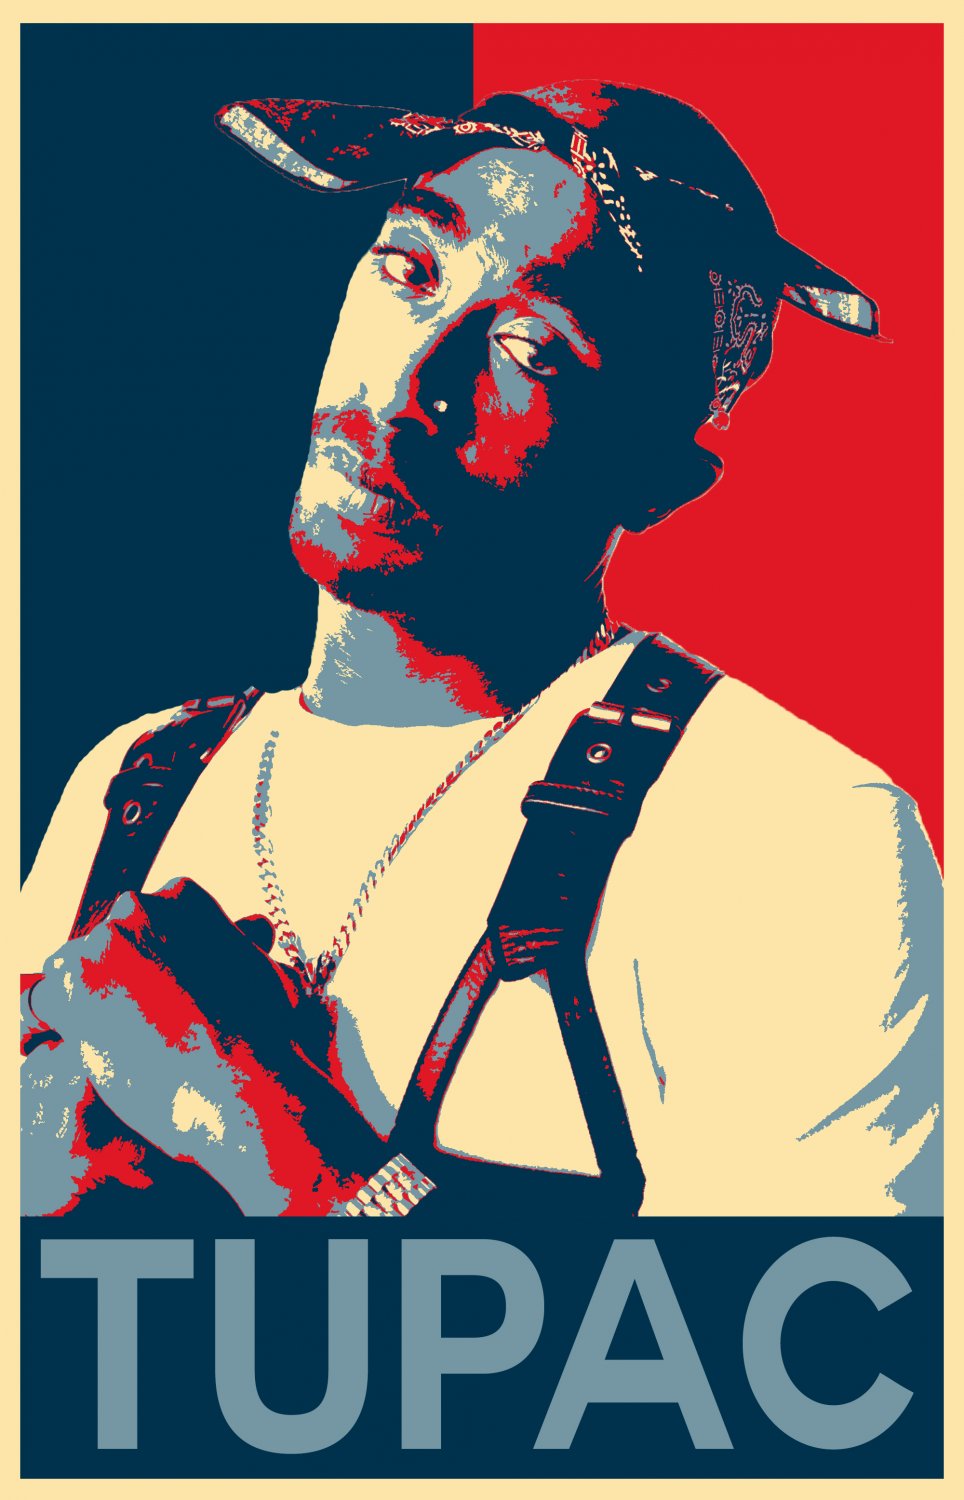 Tupac Shakur  2 Pac  13"x19" (32cm/49cm) Polyester Fabric Poster